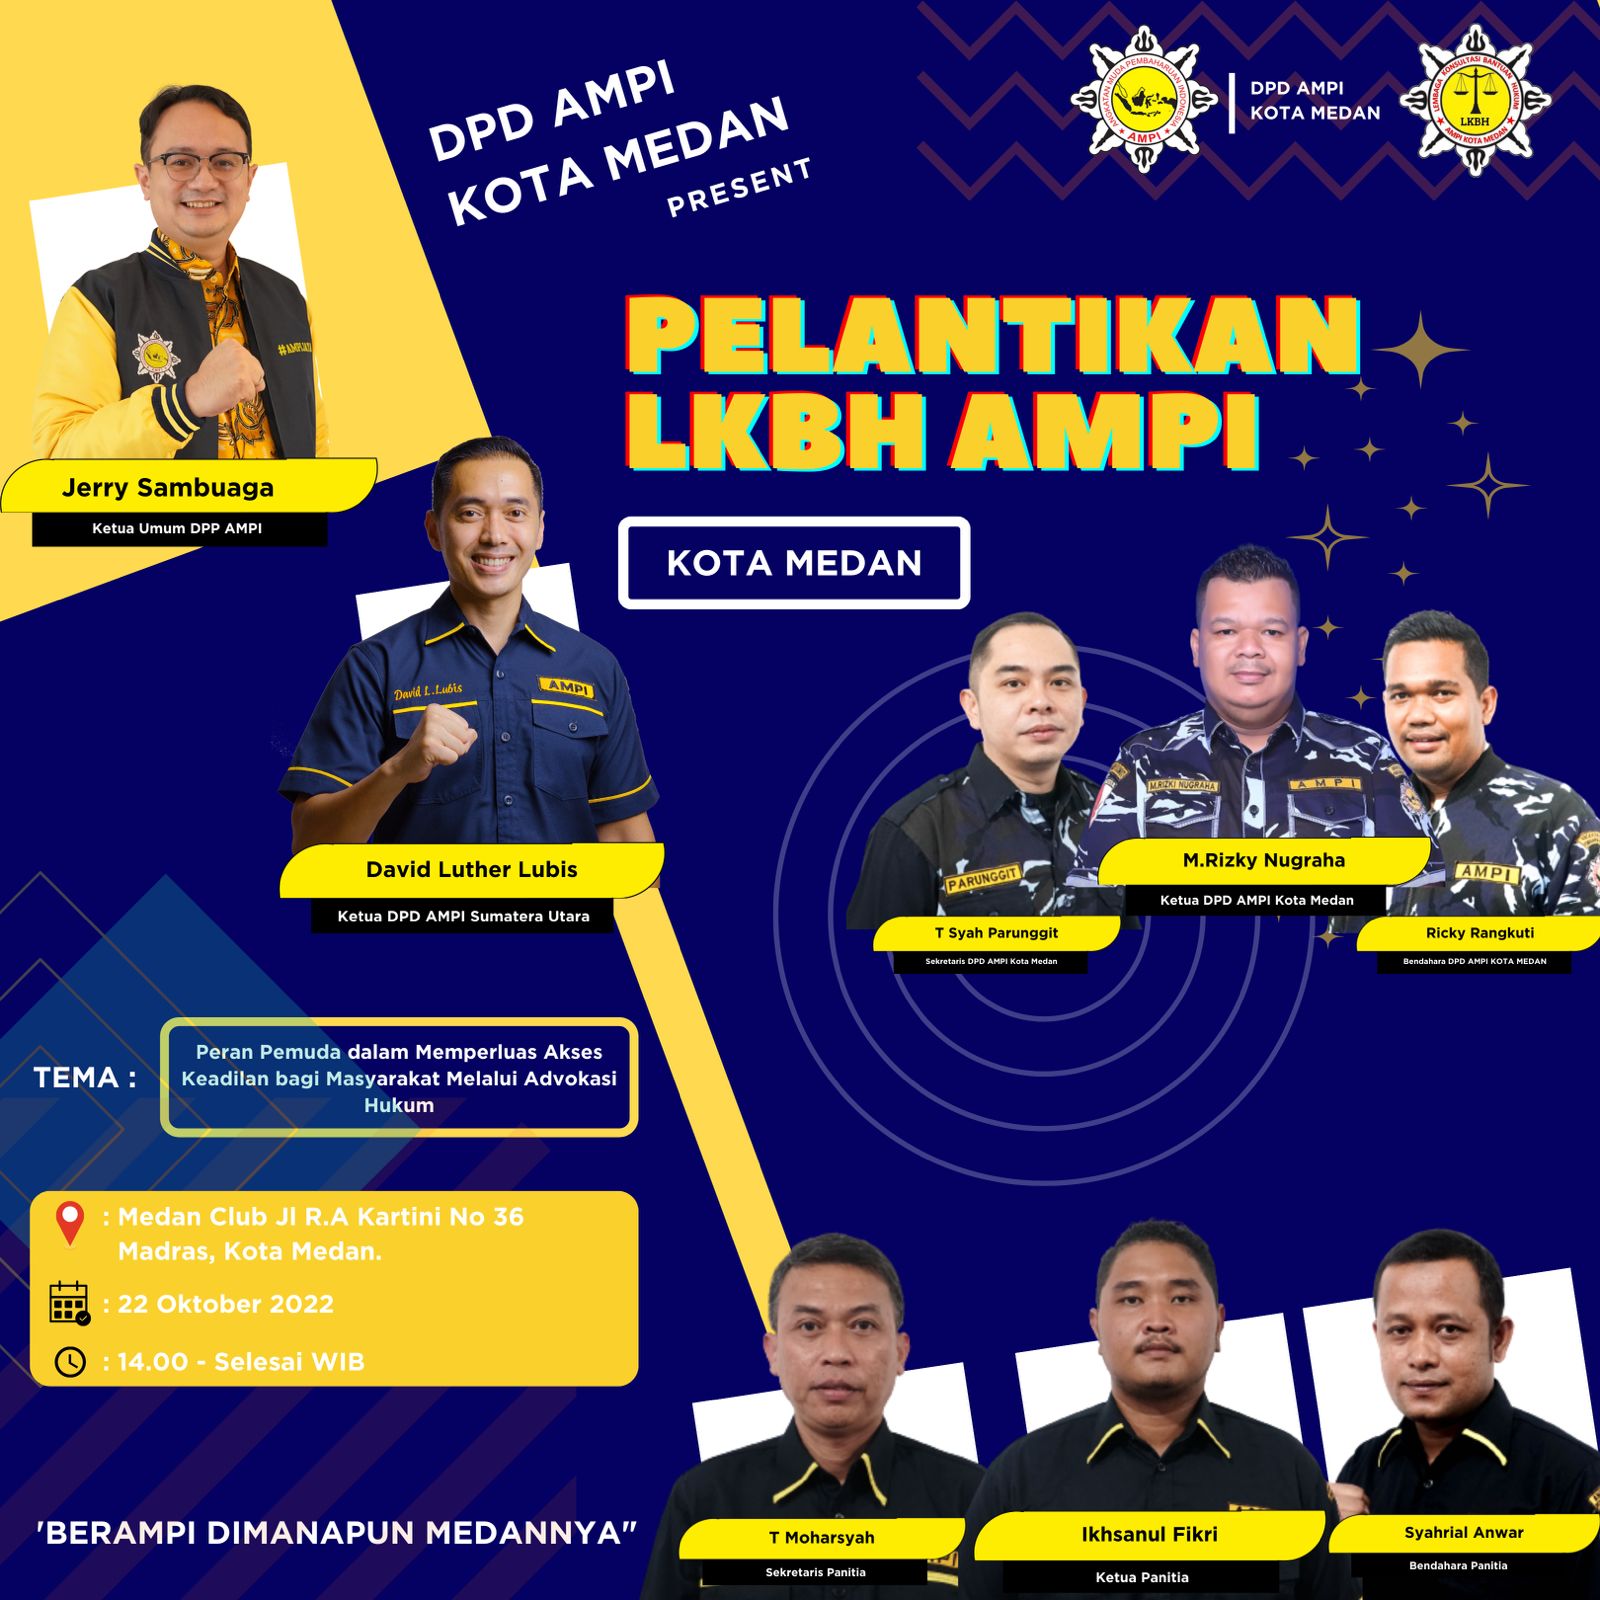 Hari Ini, Raja Makayasa Harahap Di Lantik Menjadi Direktur LKBH DPD AMPI Kota Medan Periode 2022-2027